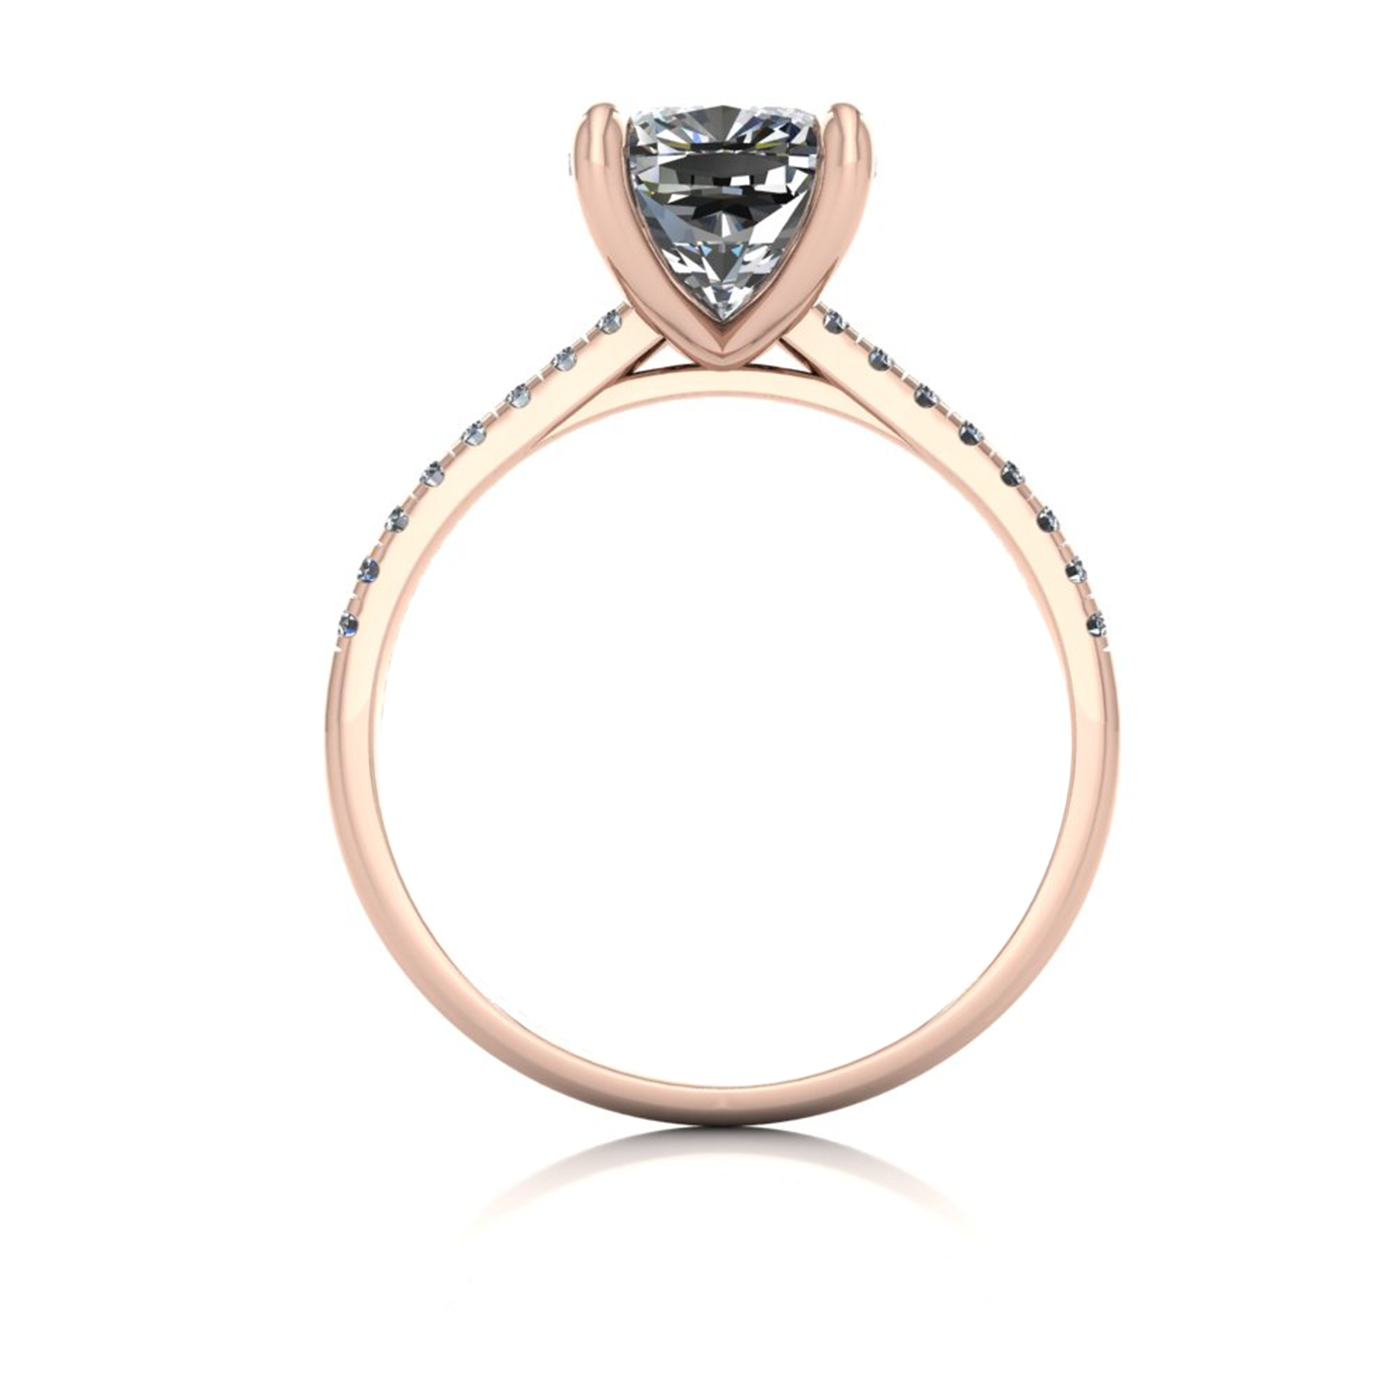 18k rose gold 2.5ct 4 prongs cushion cut diamond engagement ring with whisper thin pavÉ set band